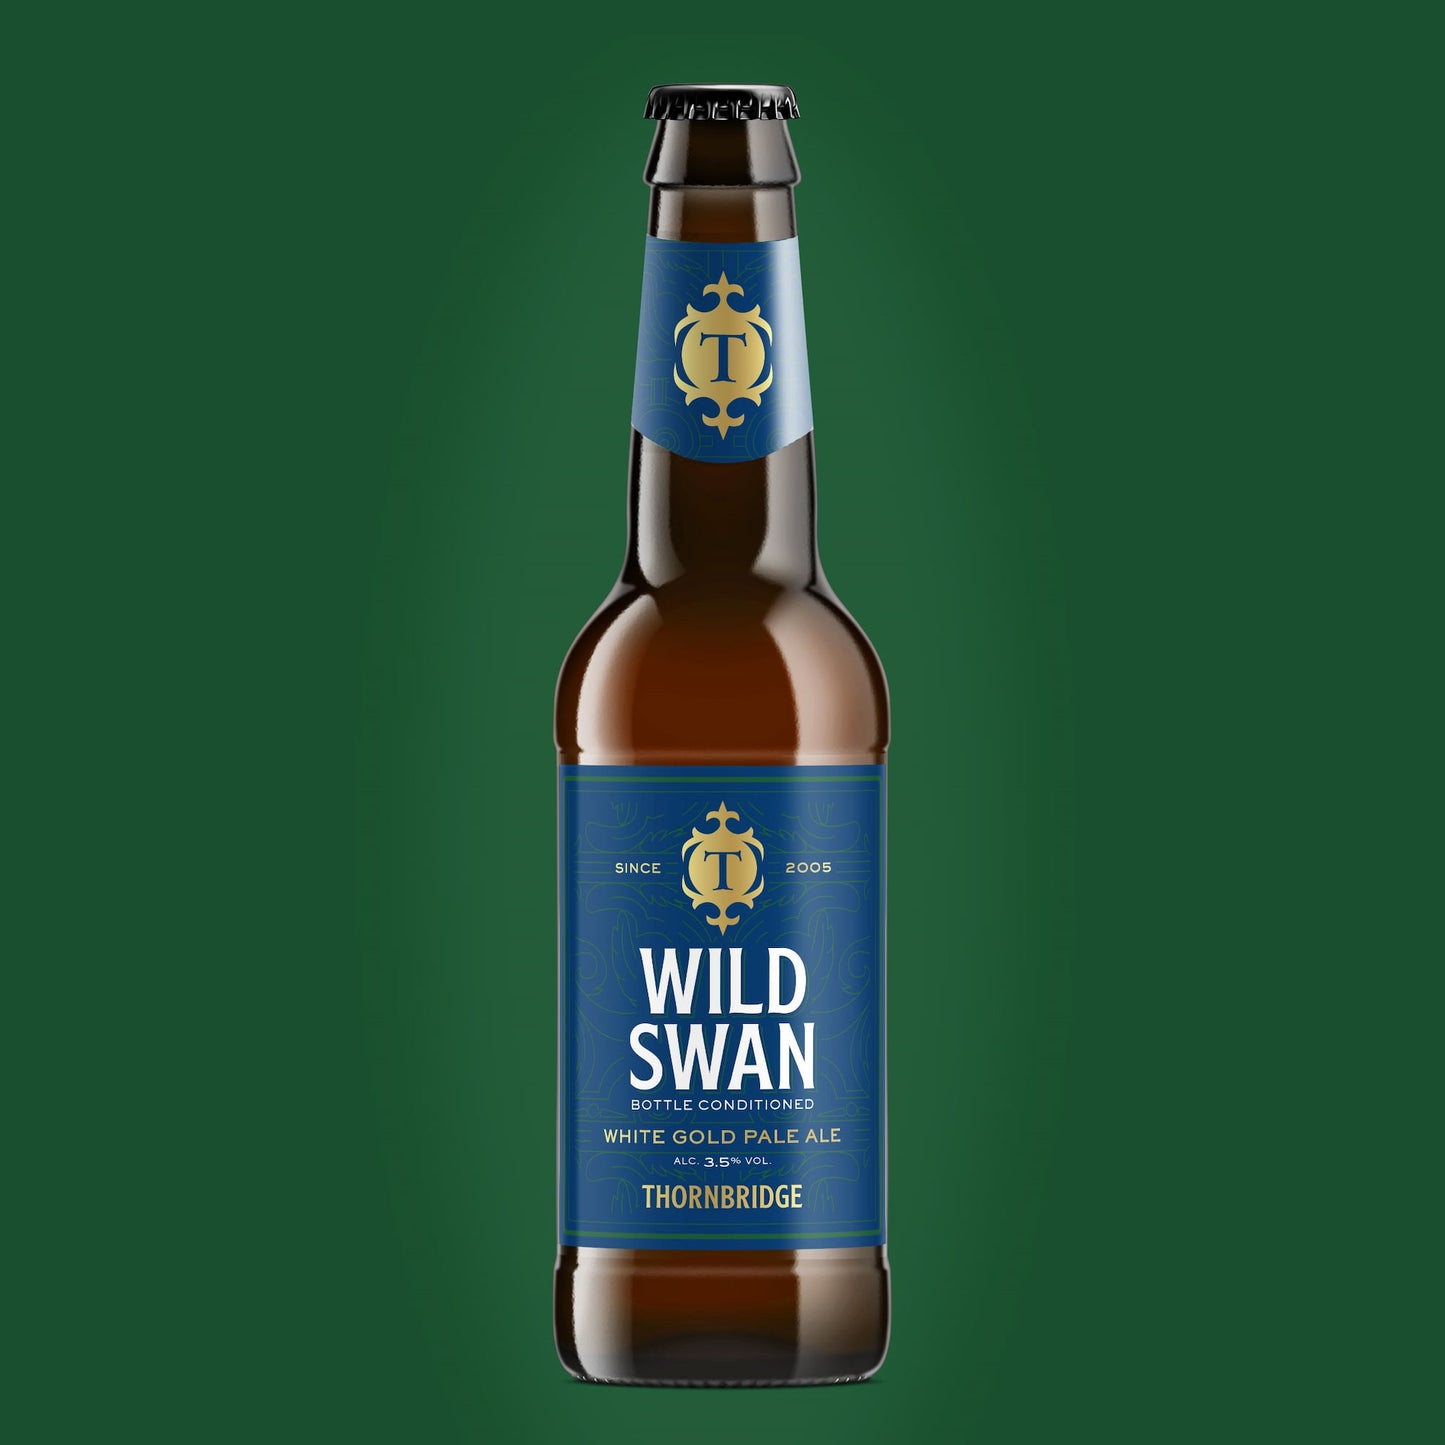 Wild Swan, 3.5% White Gold Pale Ale Beer - Single Bottle Thornbridge